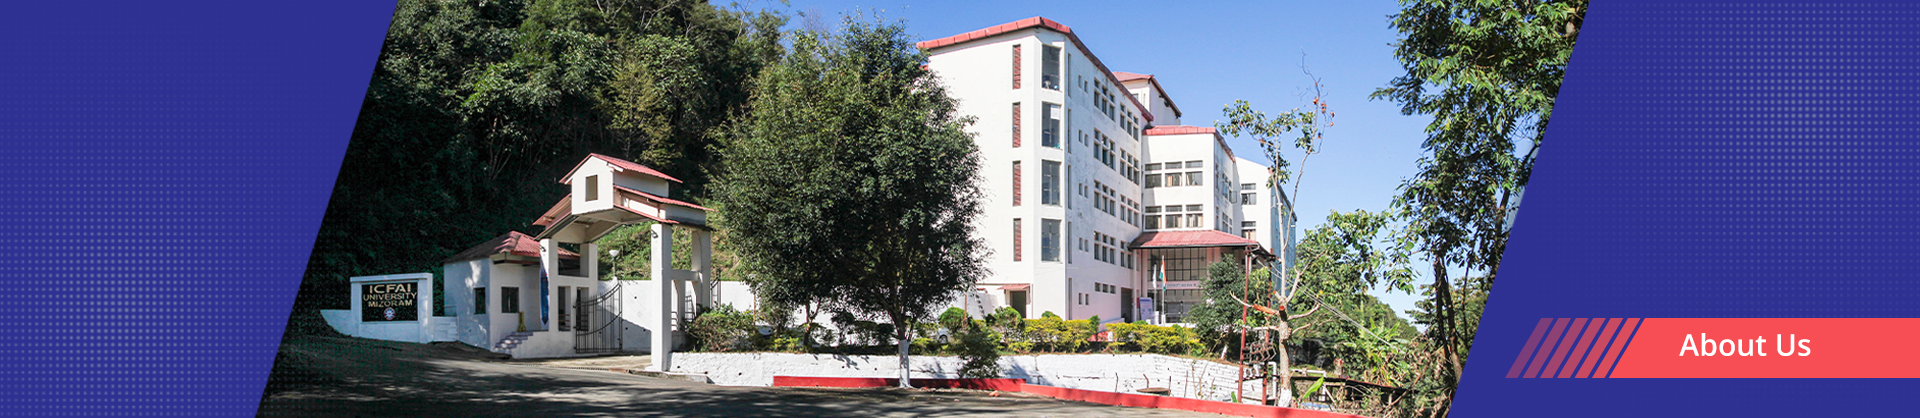 ICFAI-University-Mizoram